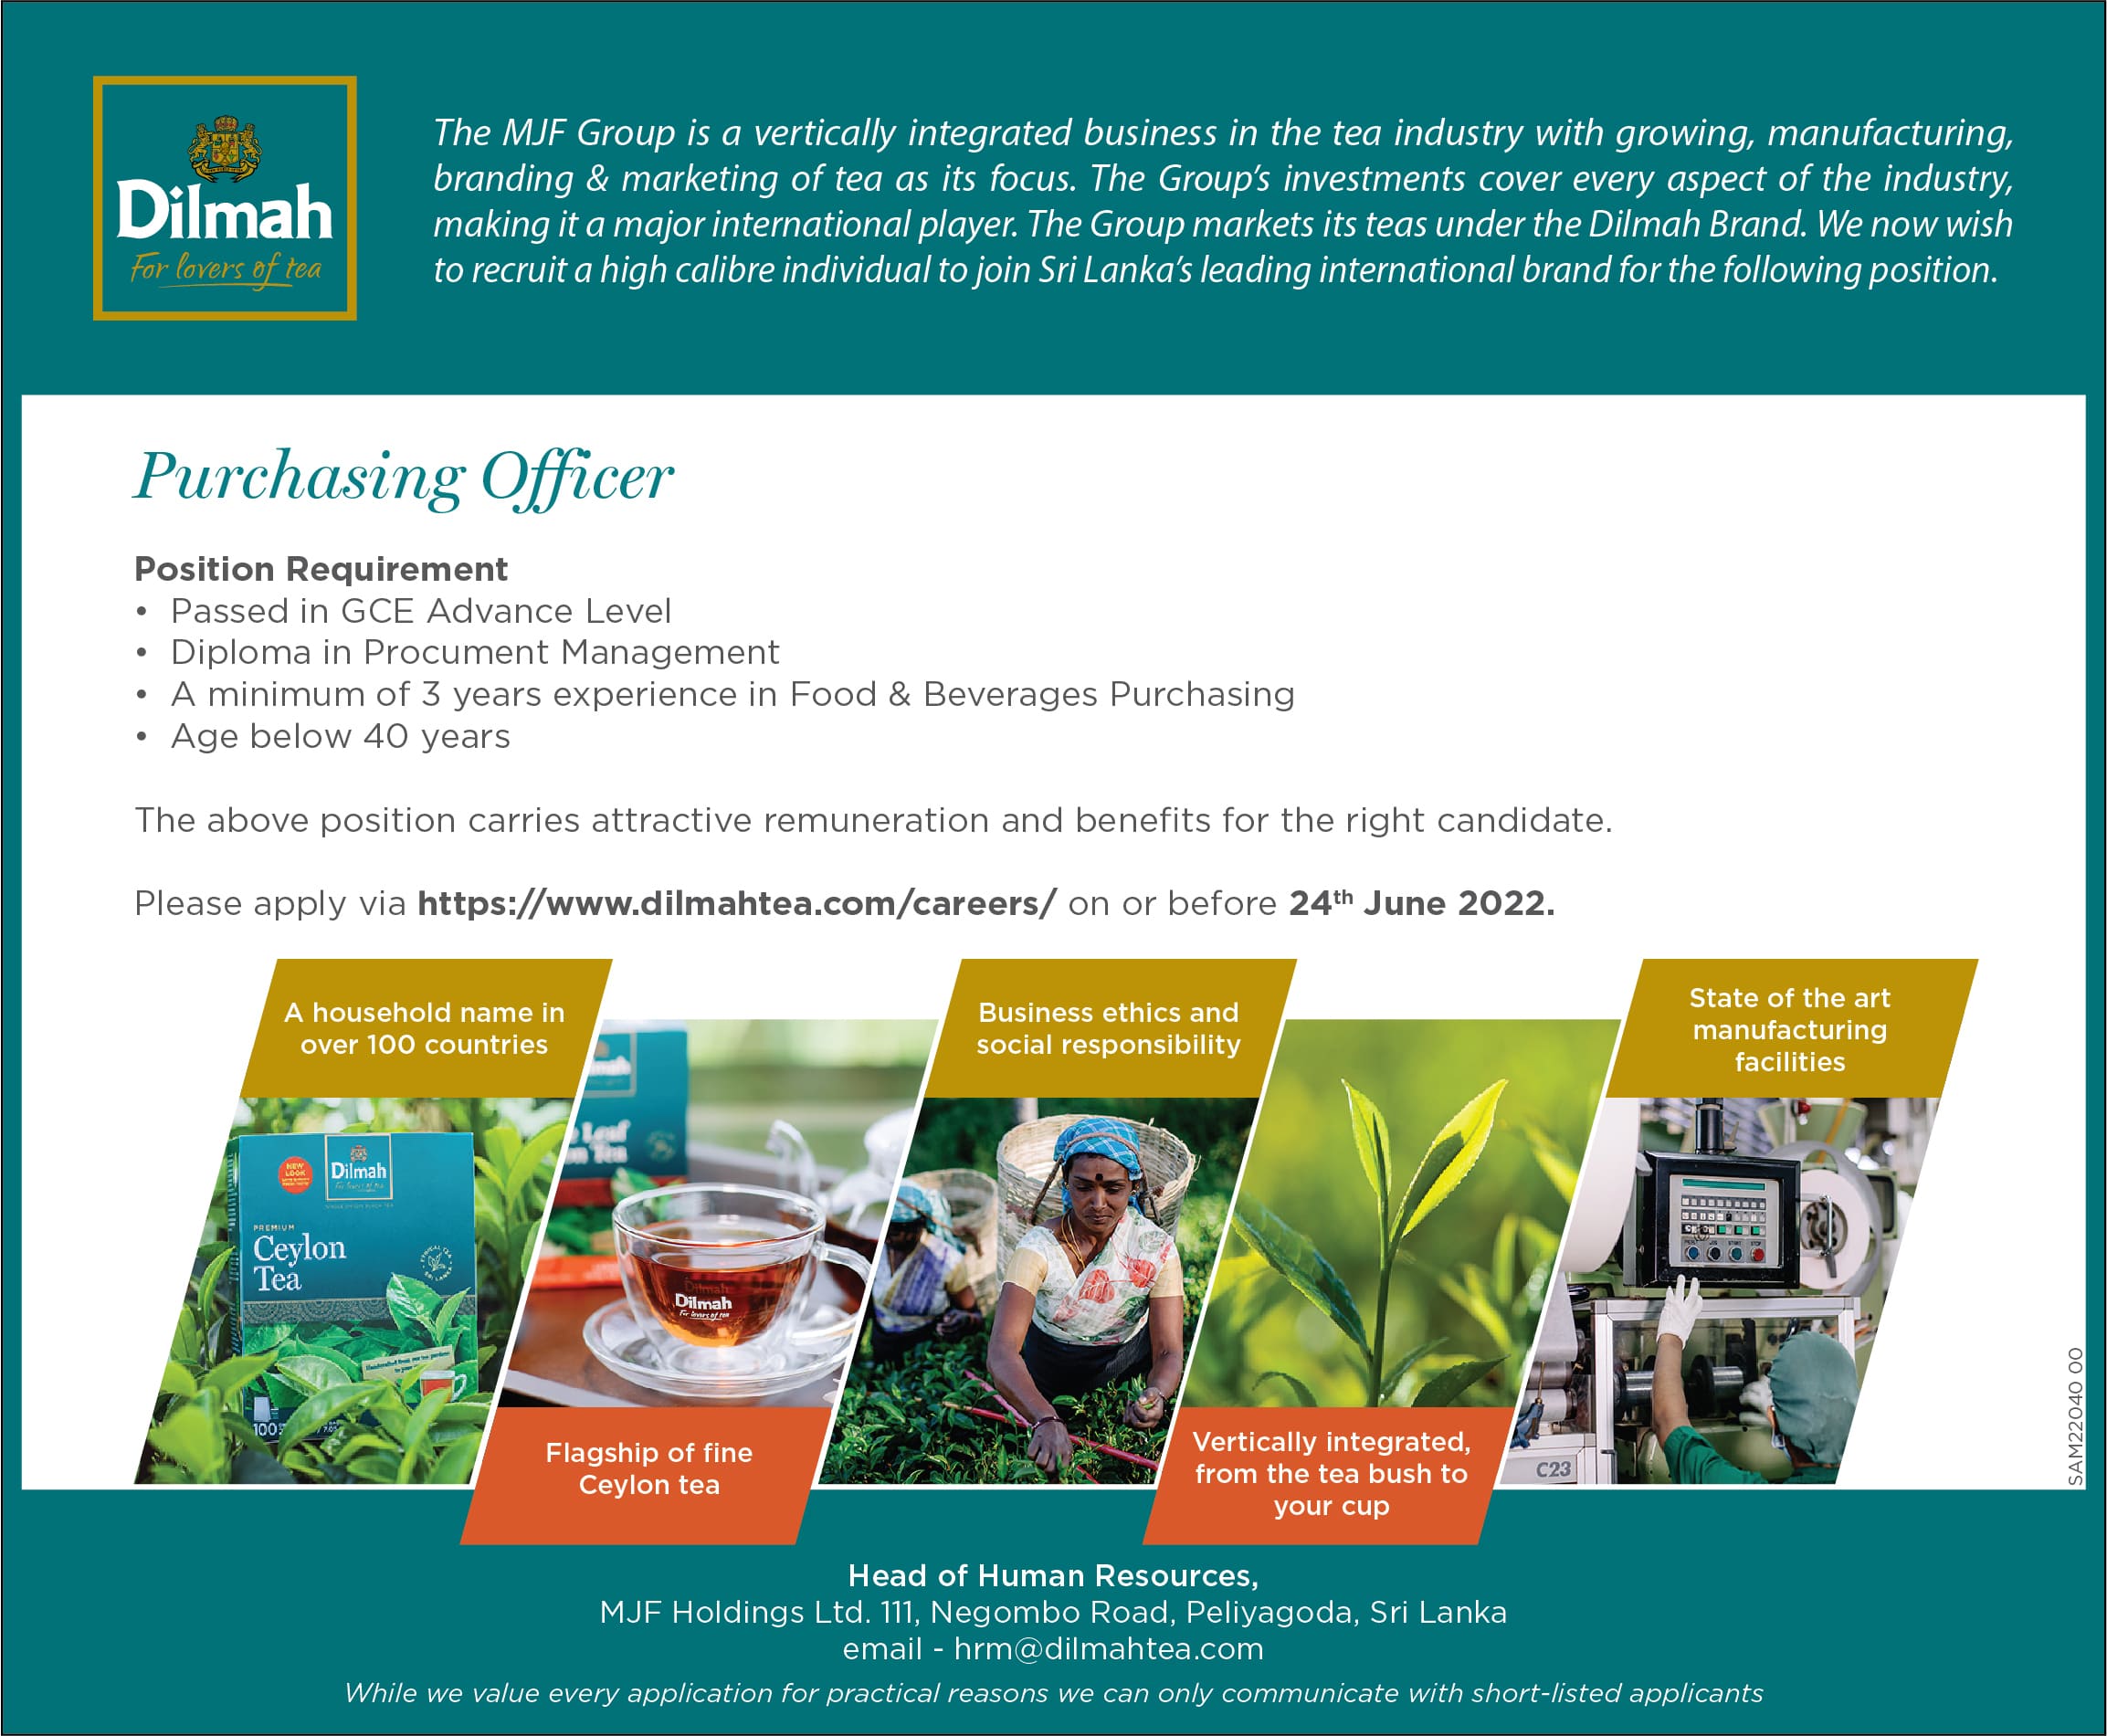 Purchasing Officer Jobs Vacancies - Dilmah Ceylon Tea Company Jobs Vacancy Details